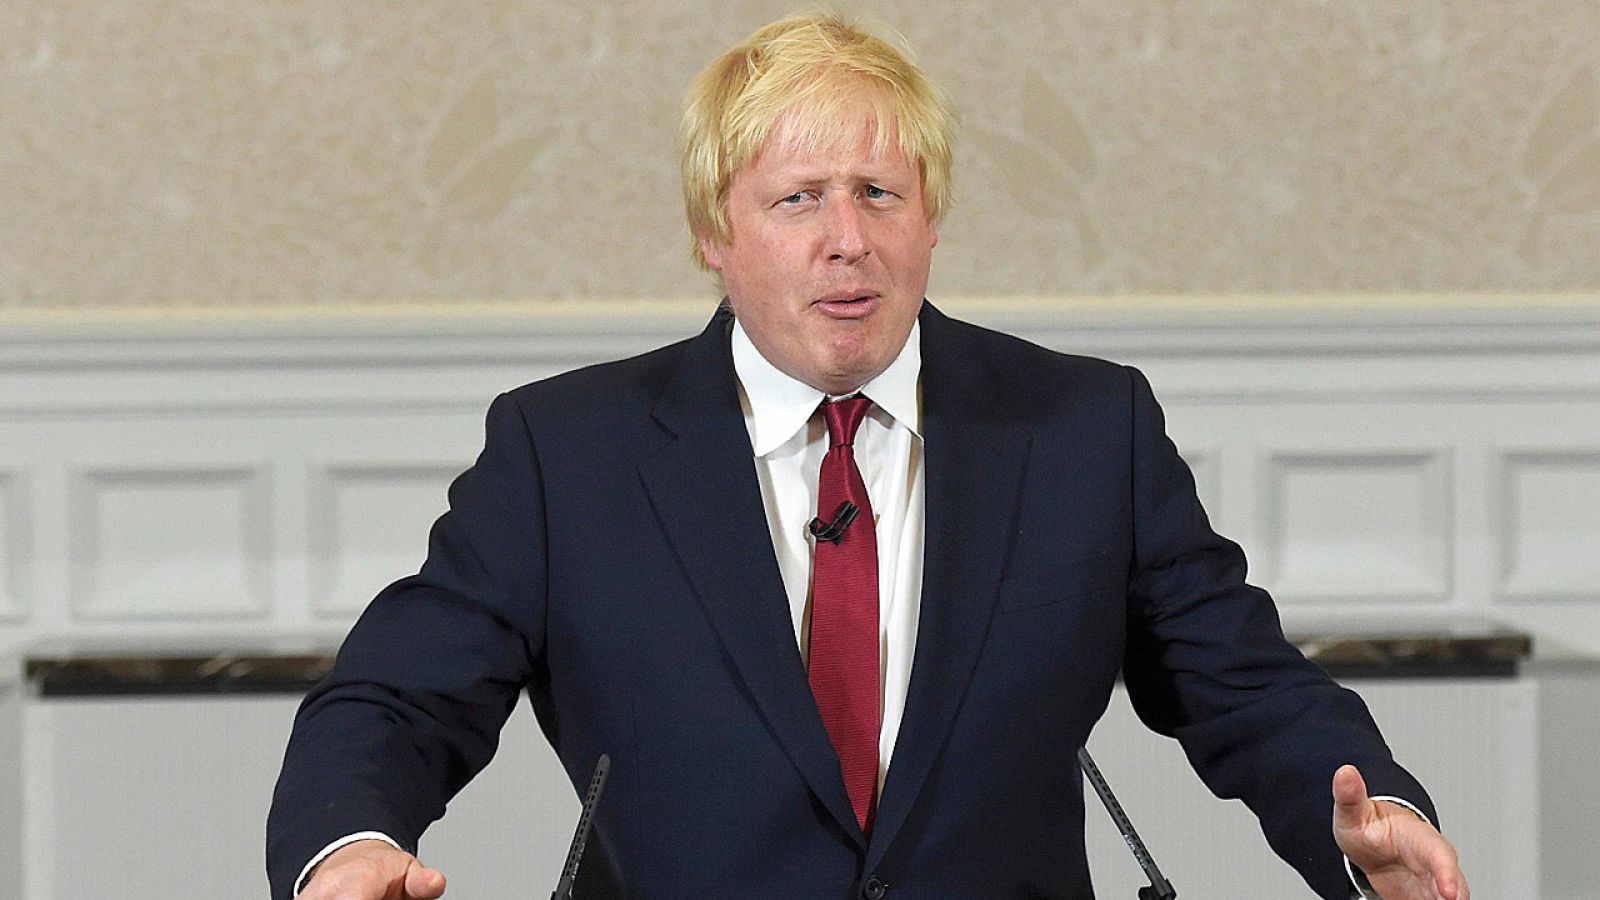 Boris Johnson da un discurso ante los medios en Londres para anunciar que no se presenta a suceder a David Cameron.